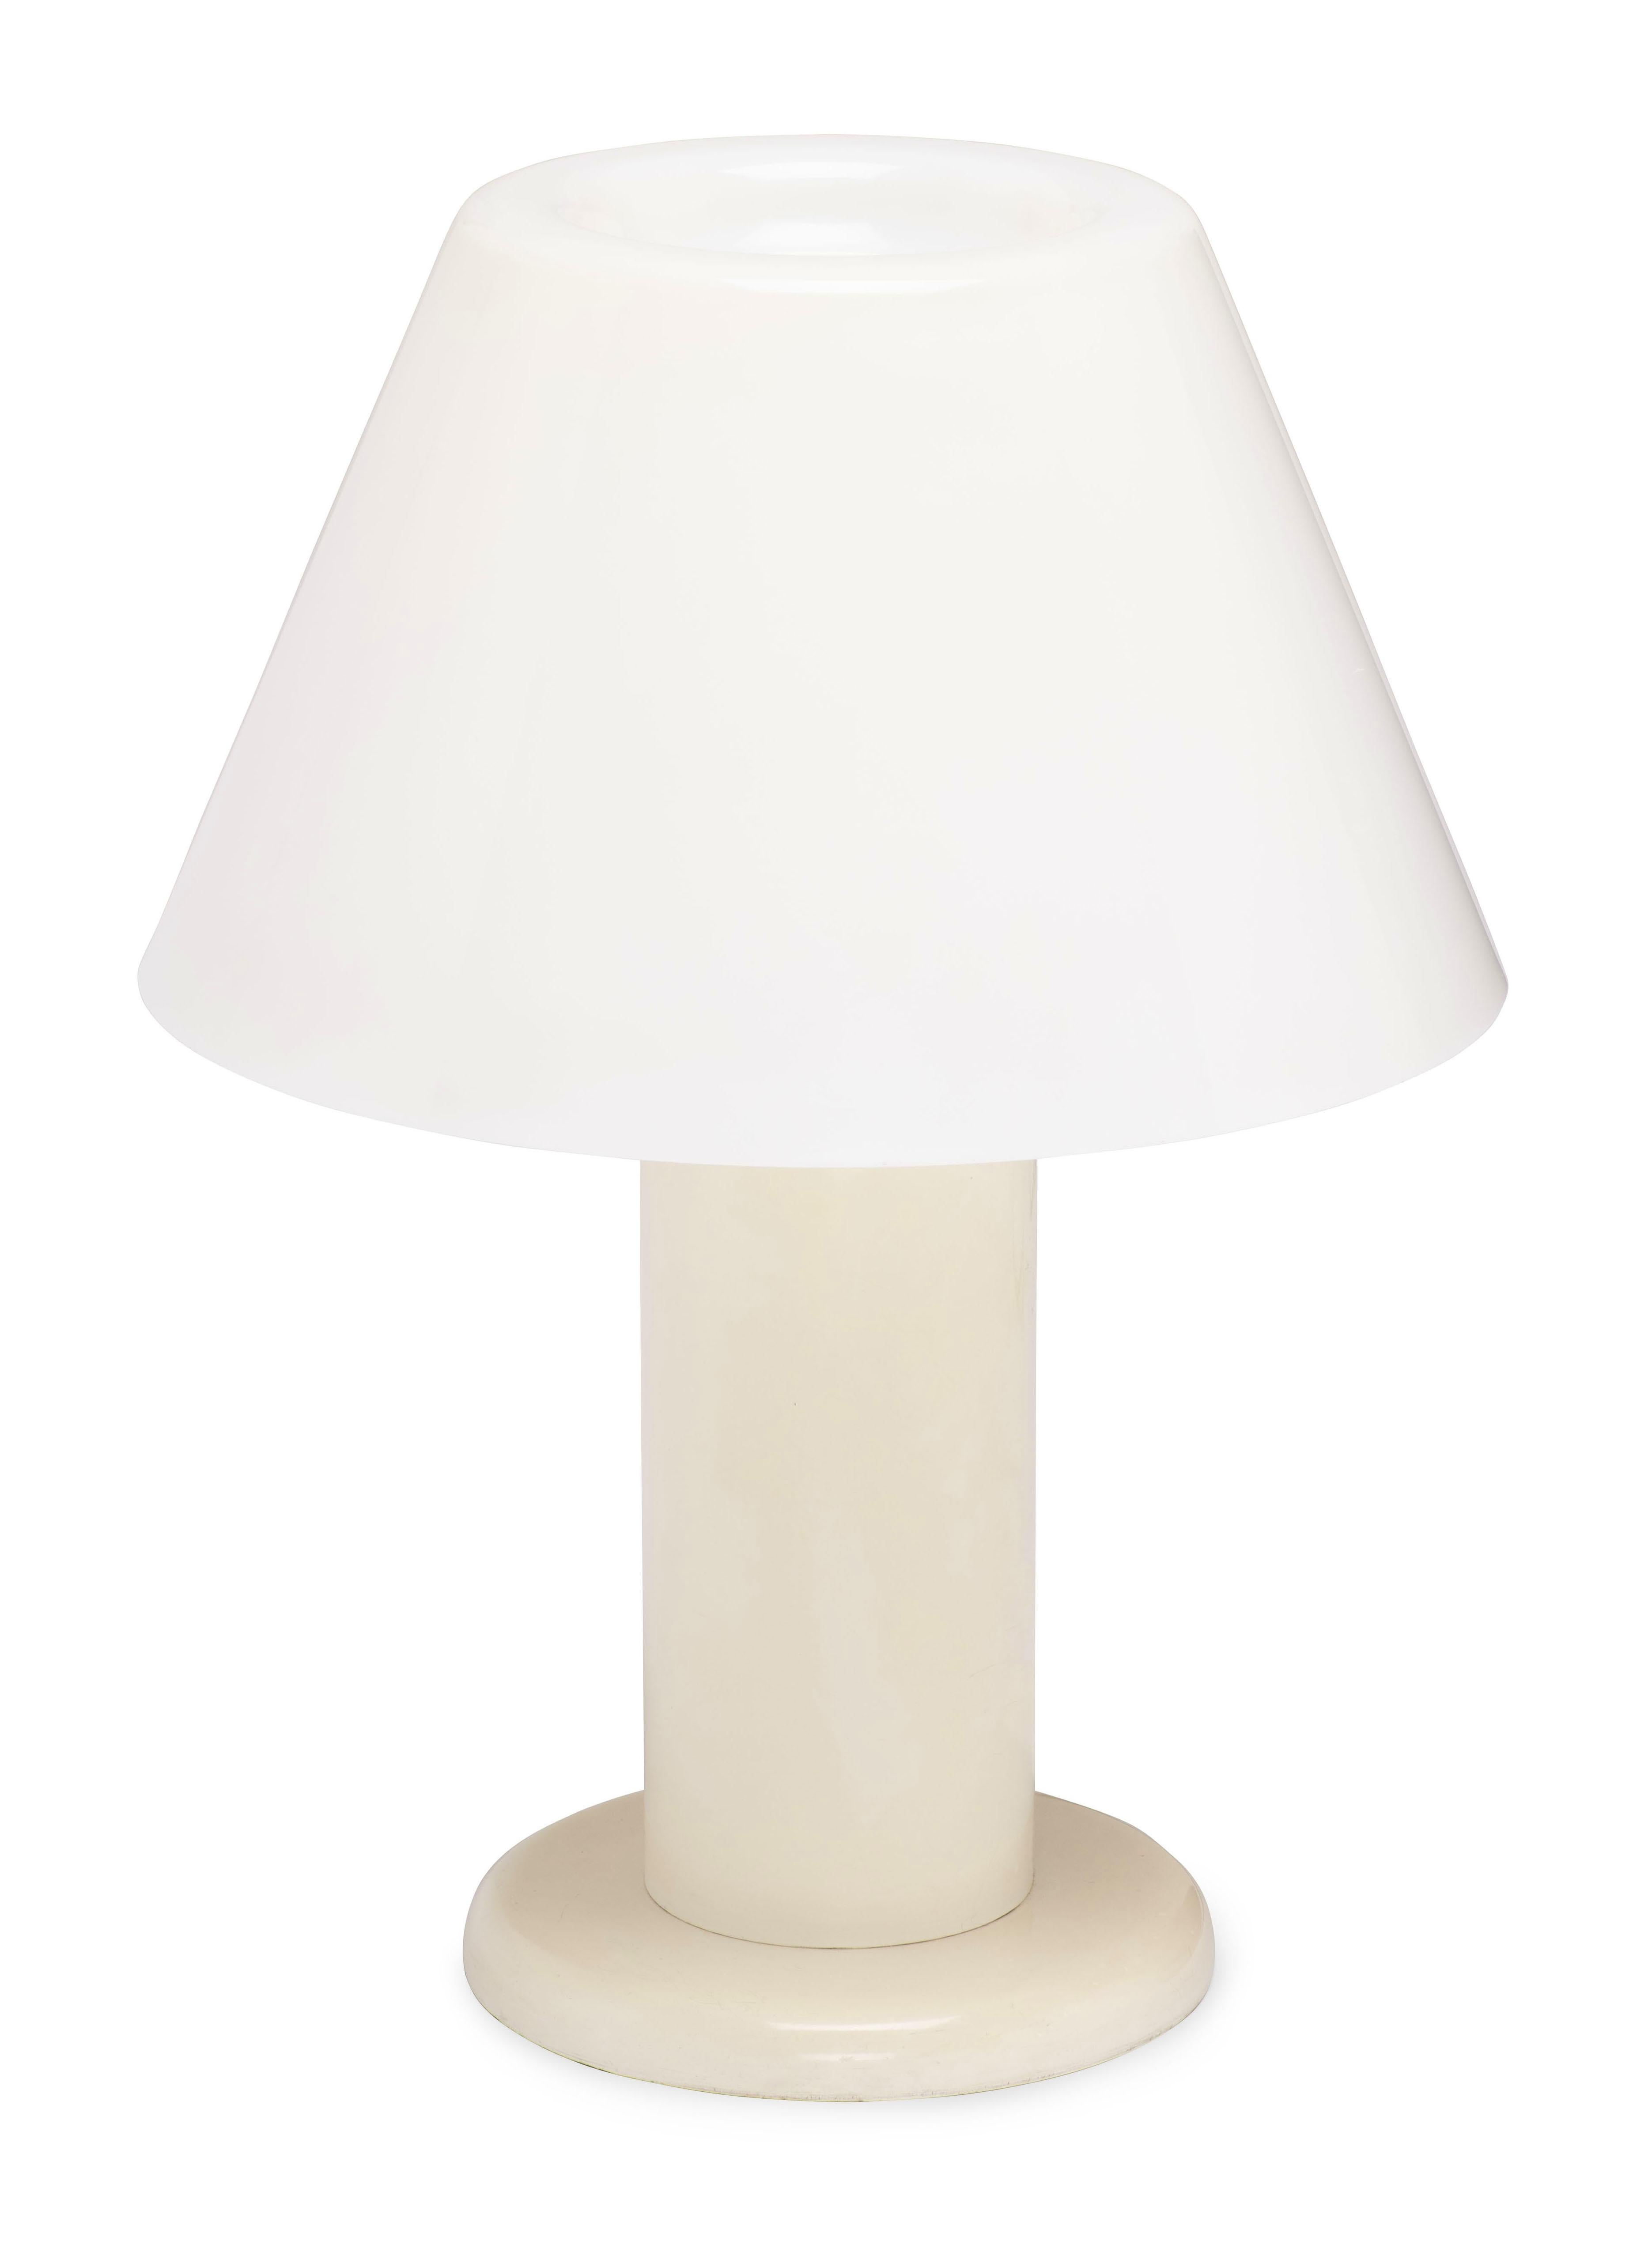 Italian Harvey Guzzini, Mushroom Table Lamp, 1980s For Sale